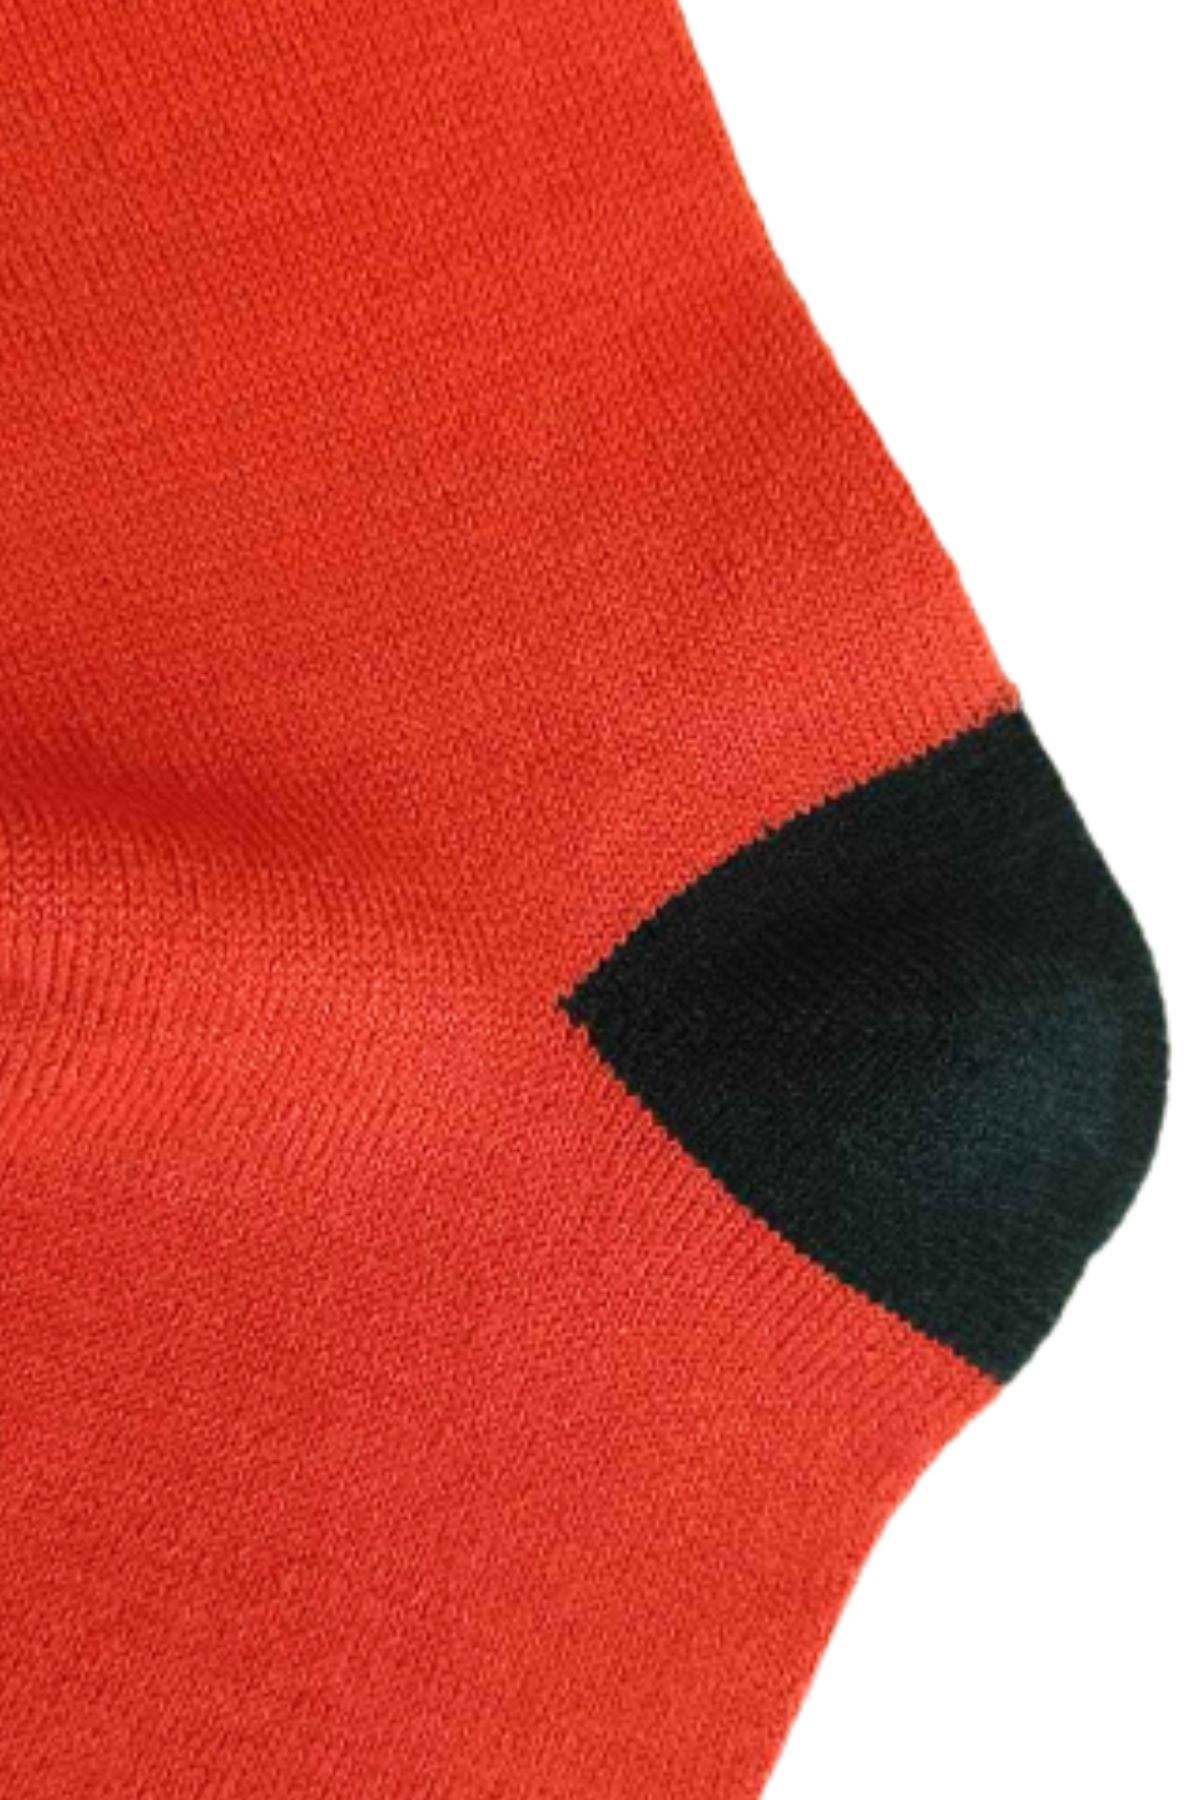 Orange & Grey Wool Blend Colorblocked Warm Fashion Socks | Men  